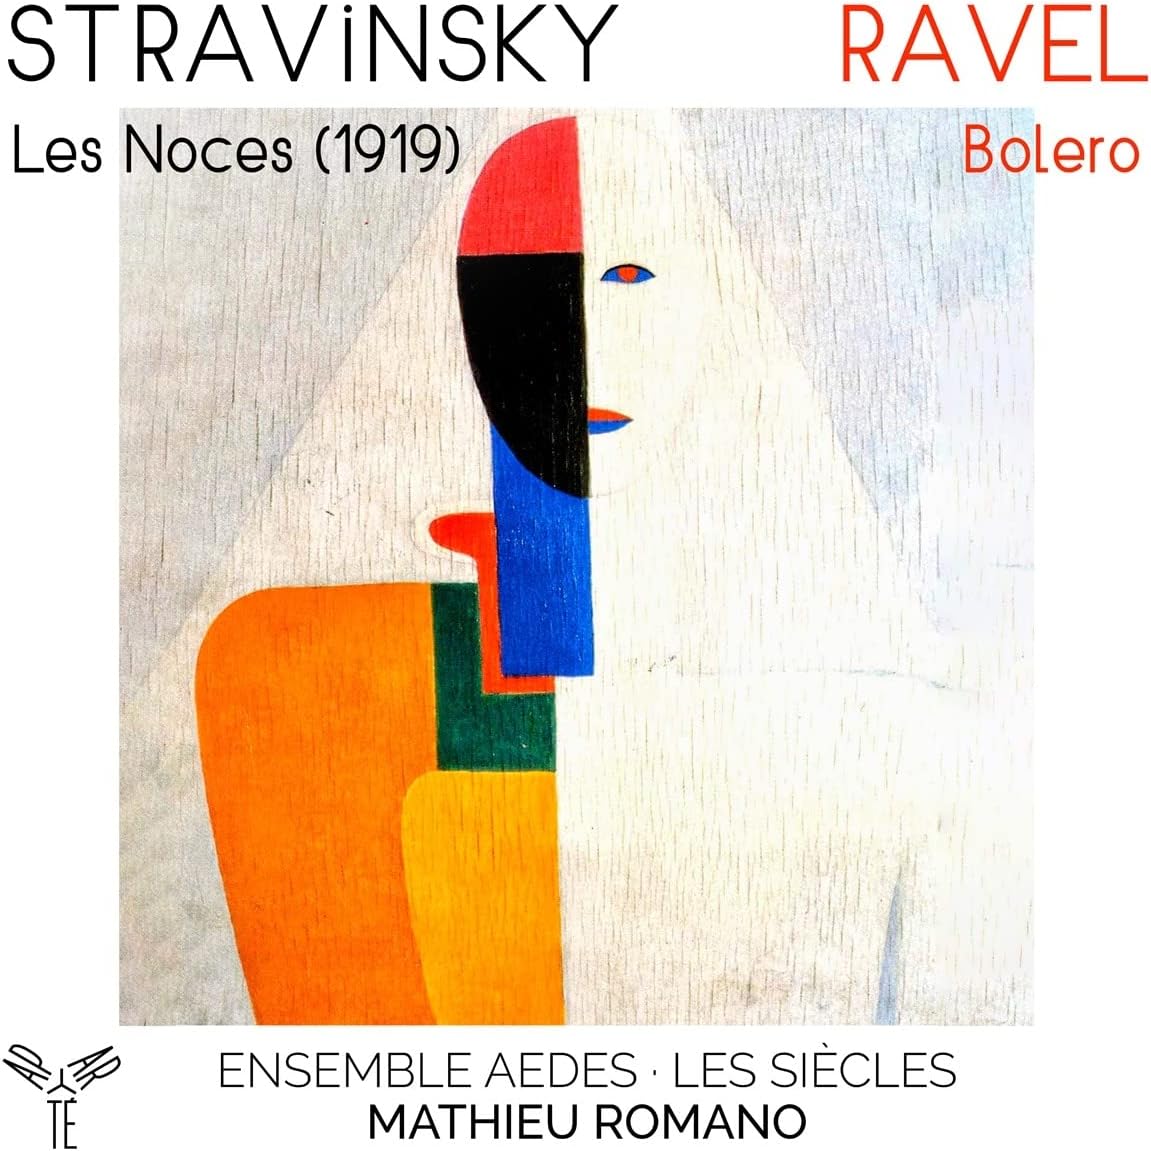 Stravinsky noces